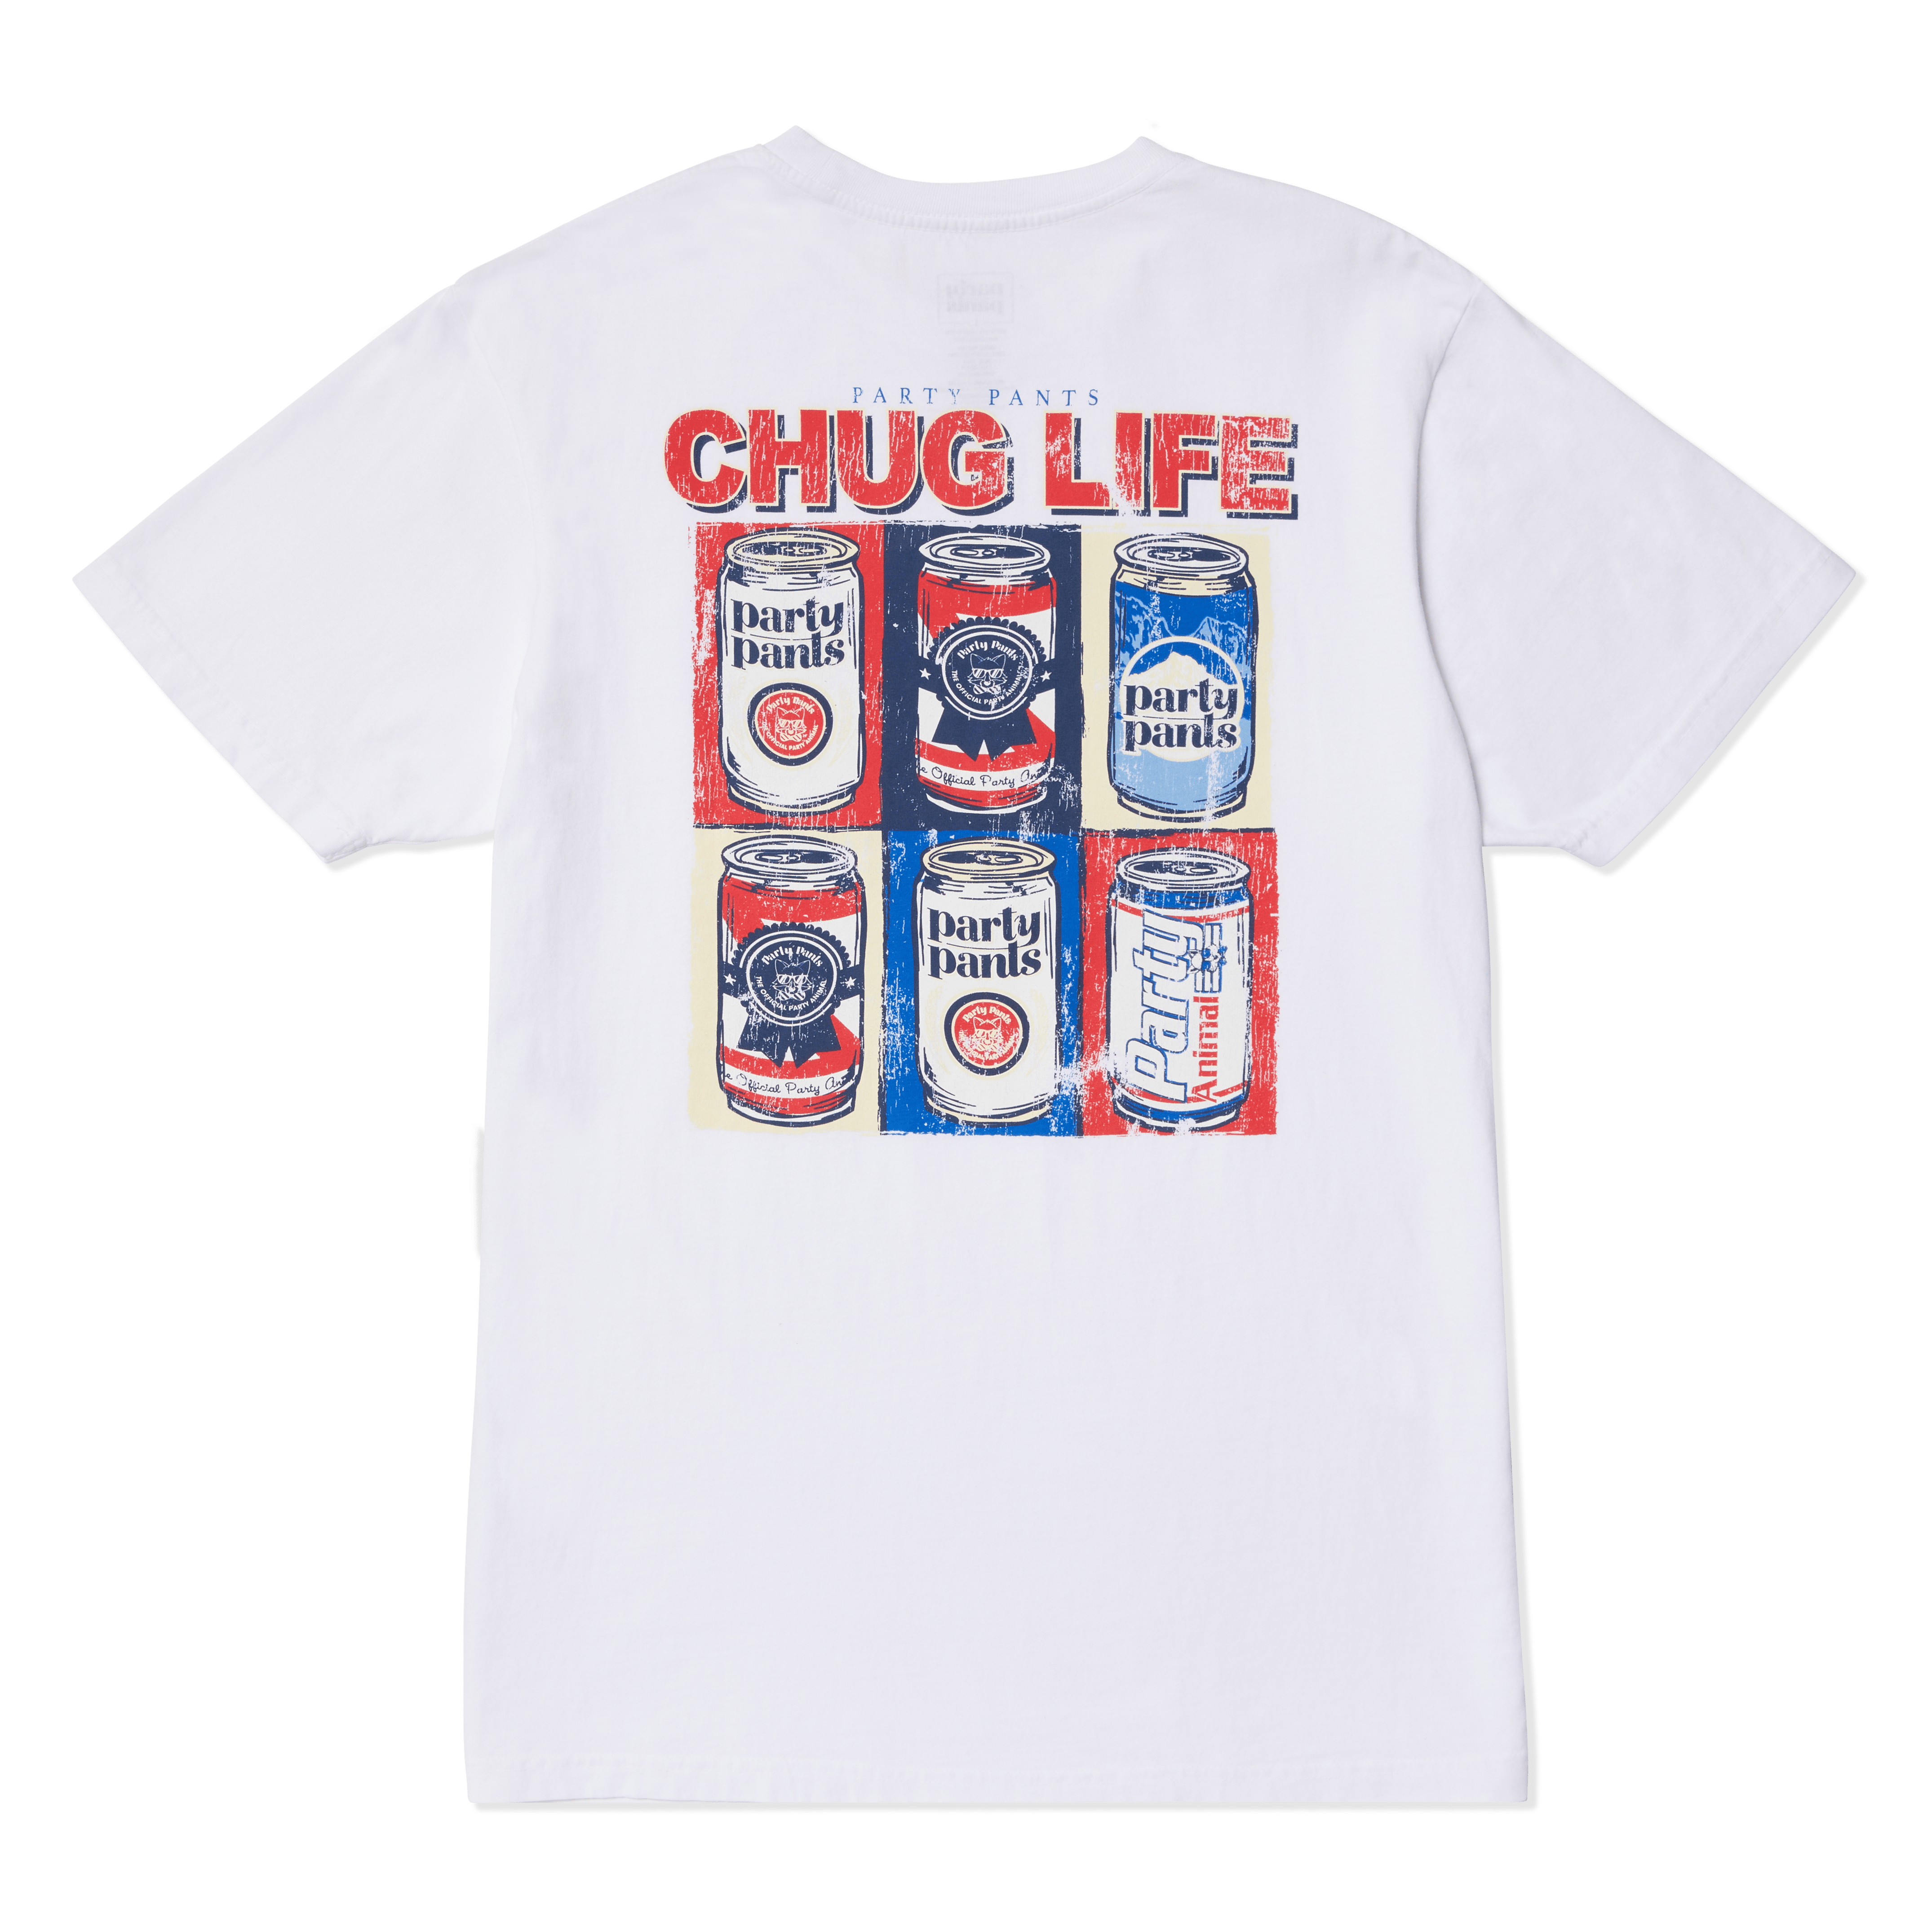 CHUG LIFE T-SHIRT - WHITE TEE PARTY PANTS 